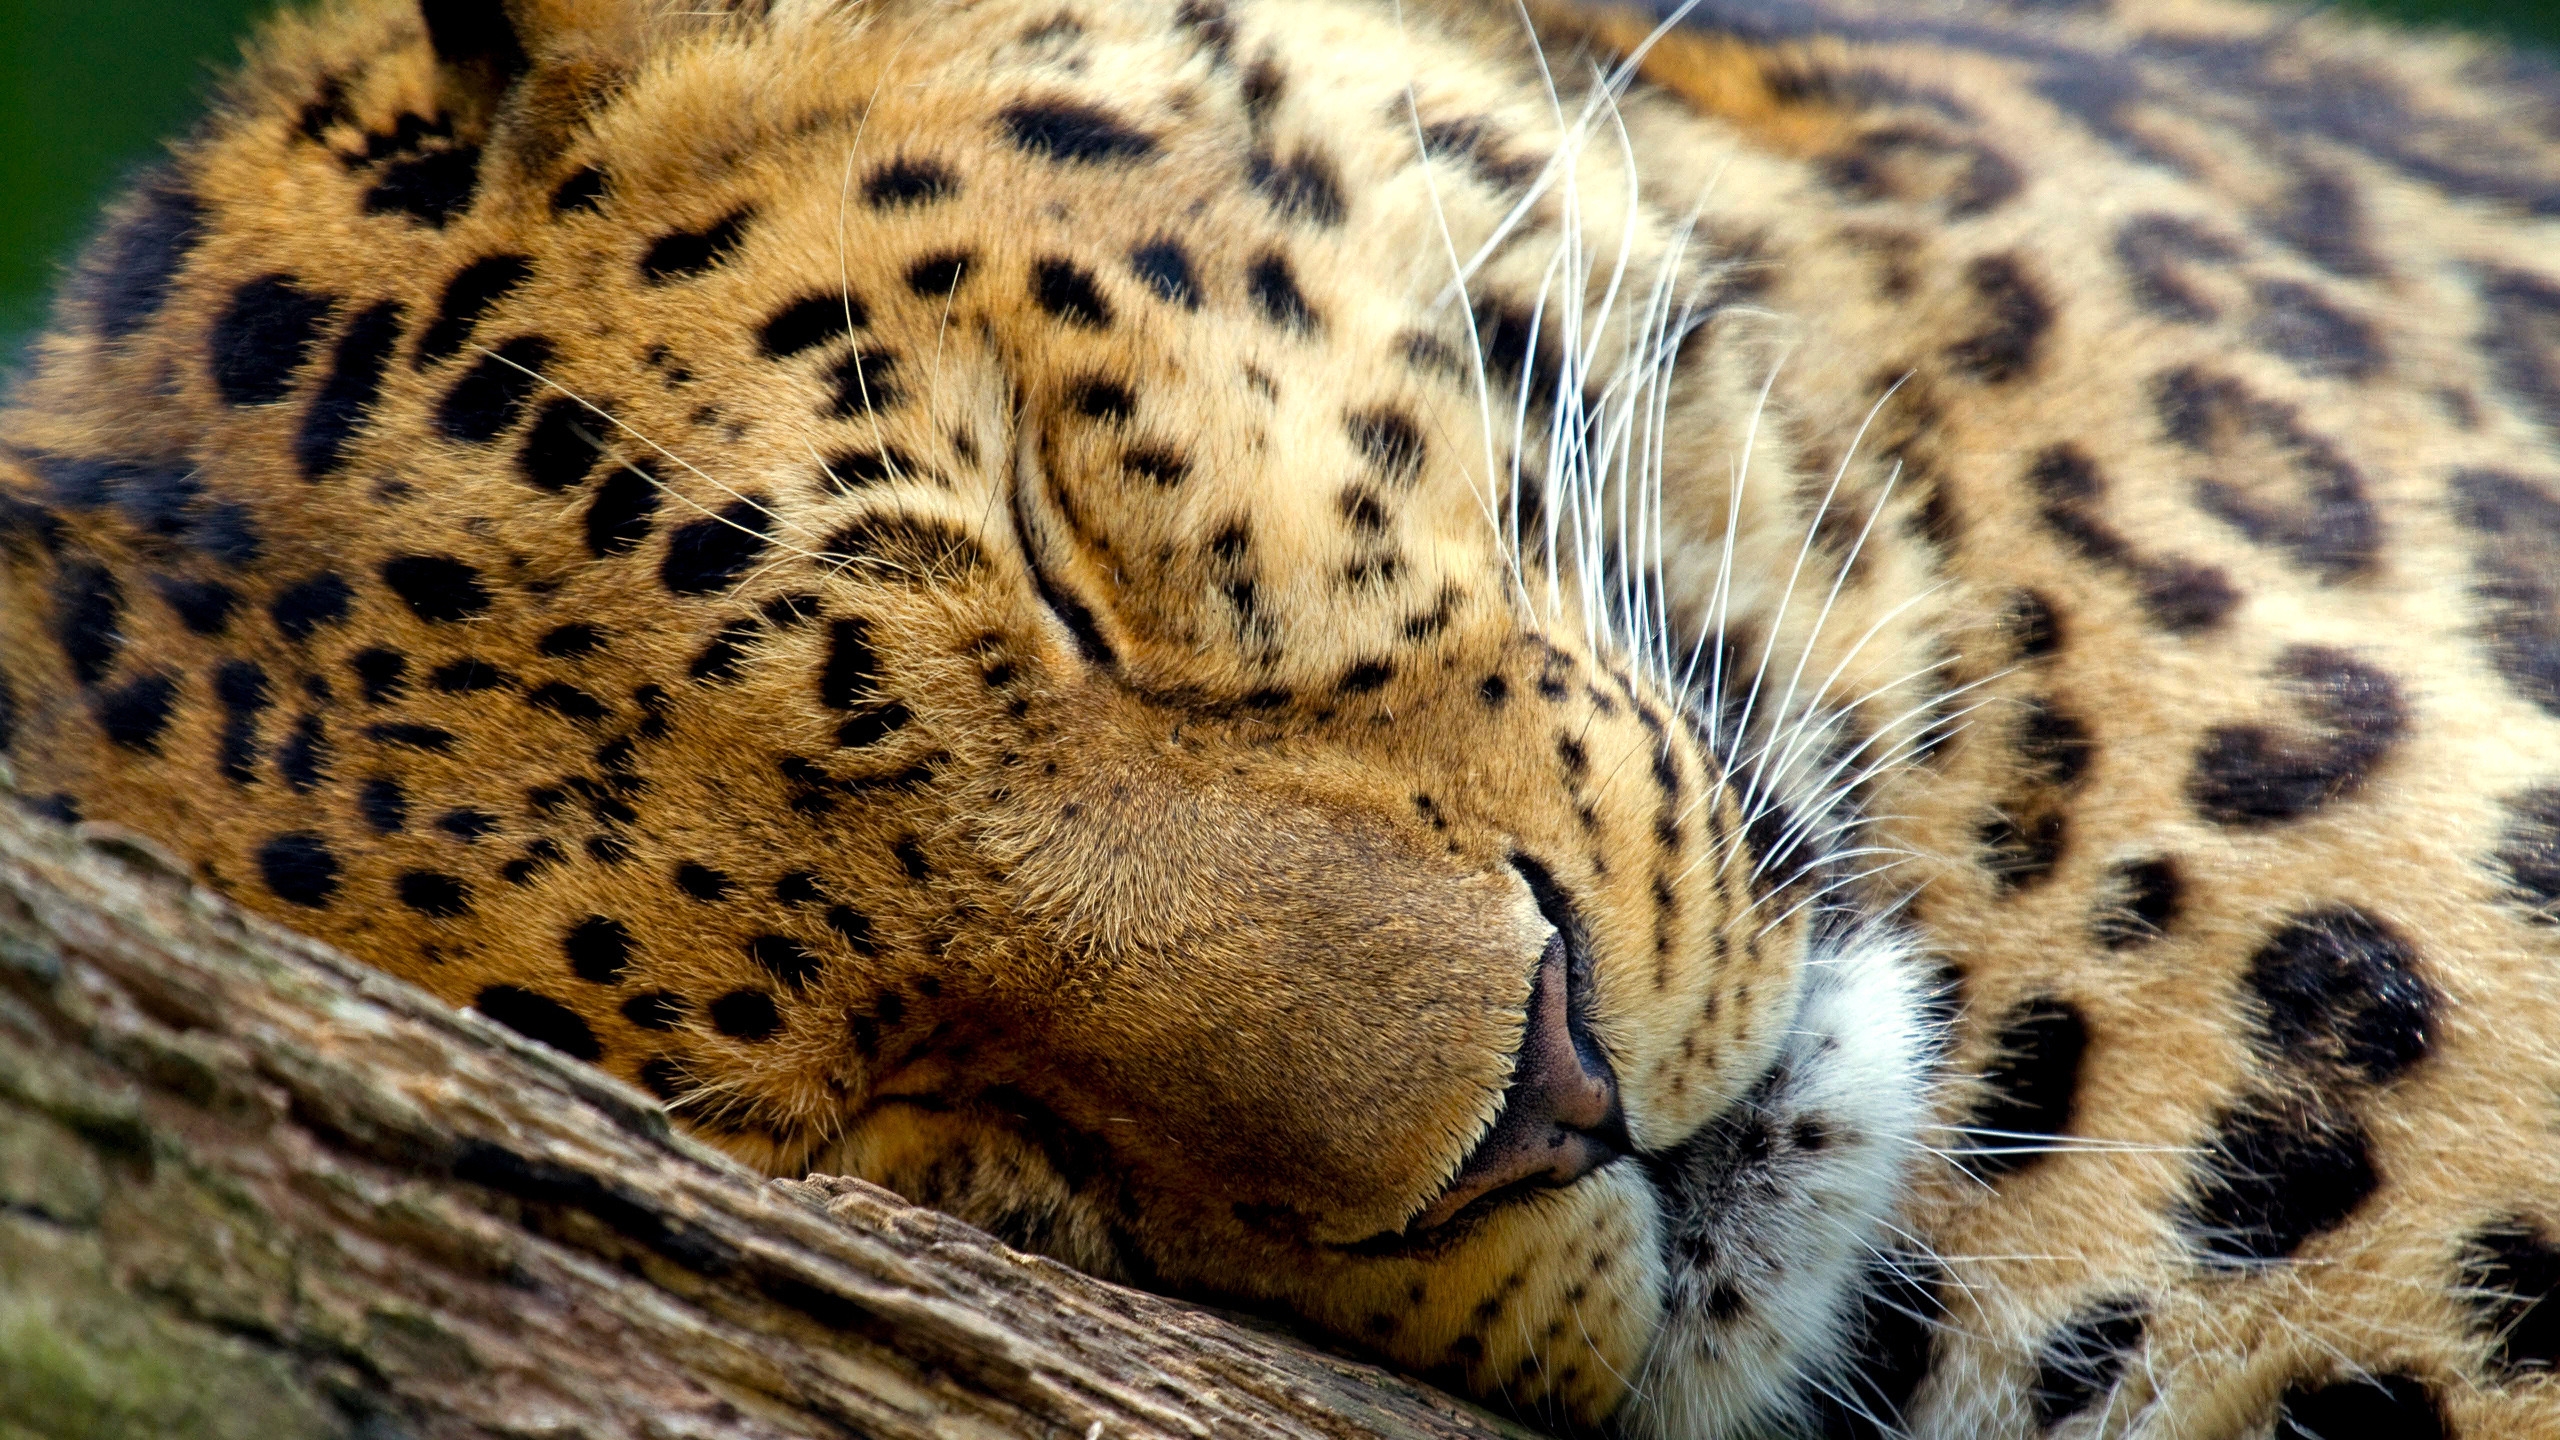 Cute Leopard Sleeping for 2560x1440 HDTV resolution